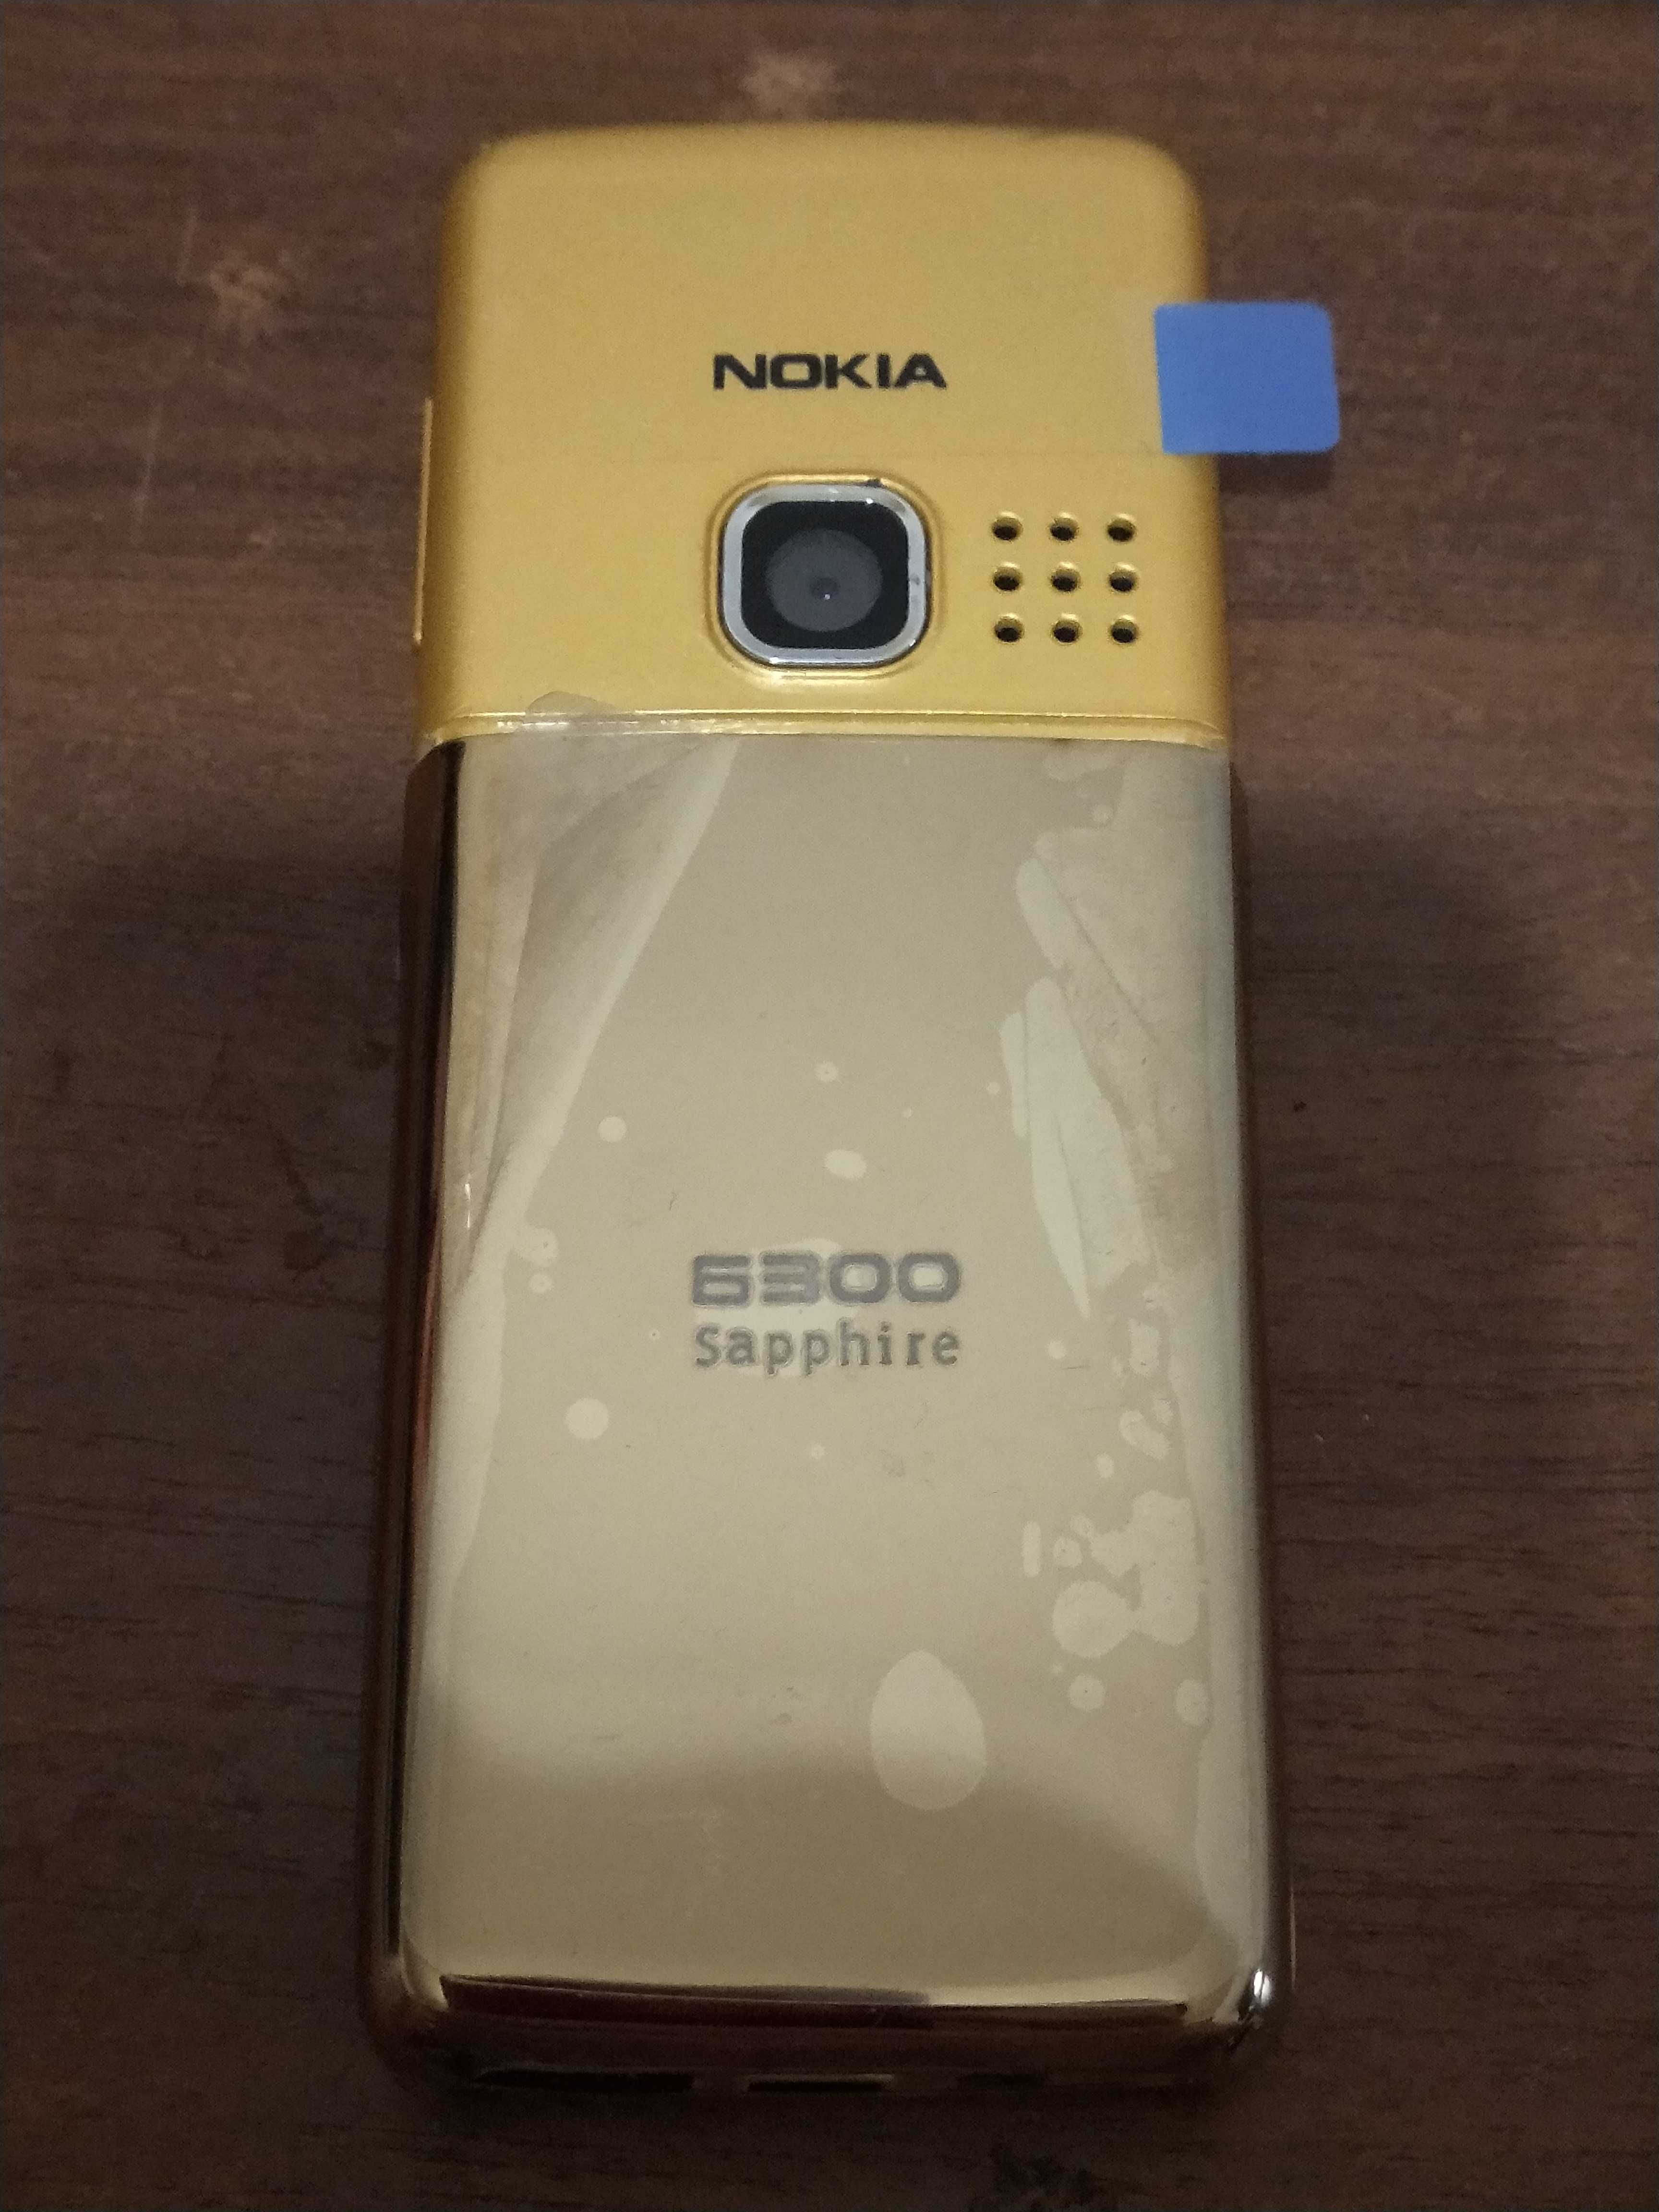 Nokia 6300 Saphire